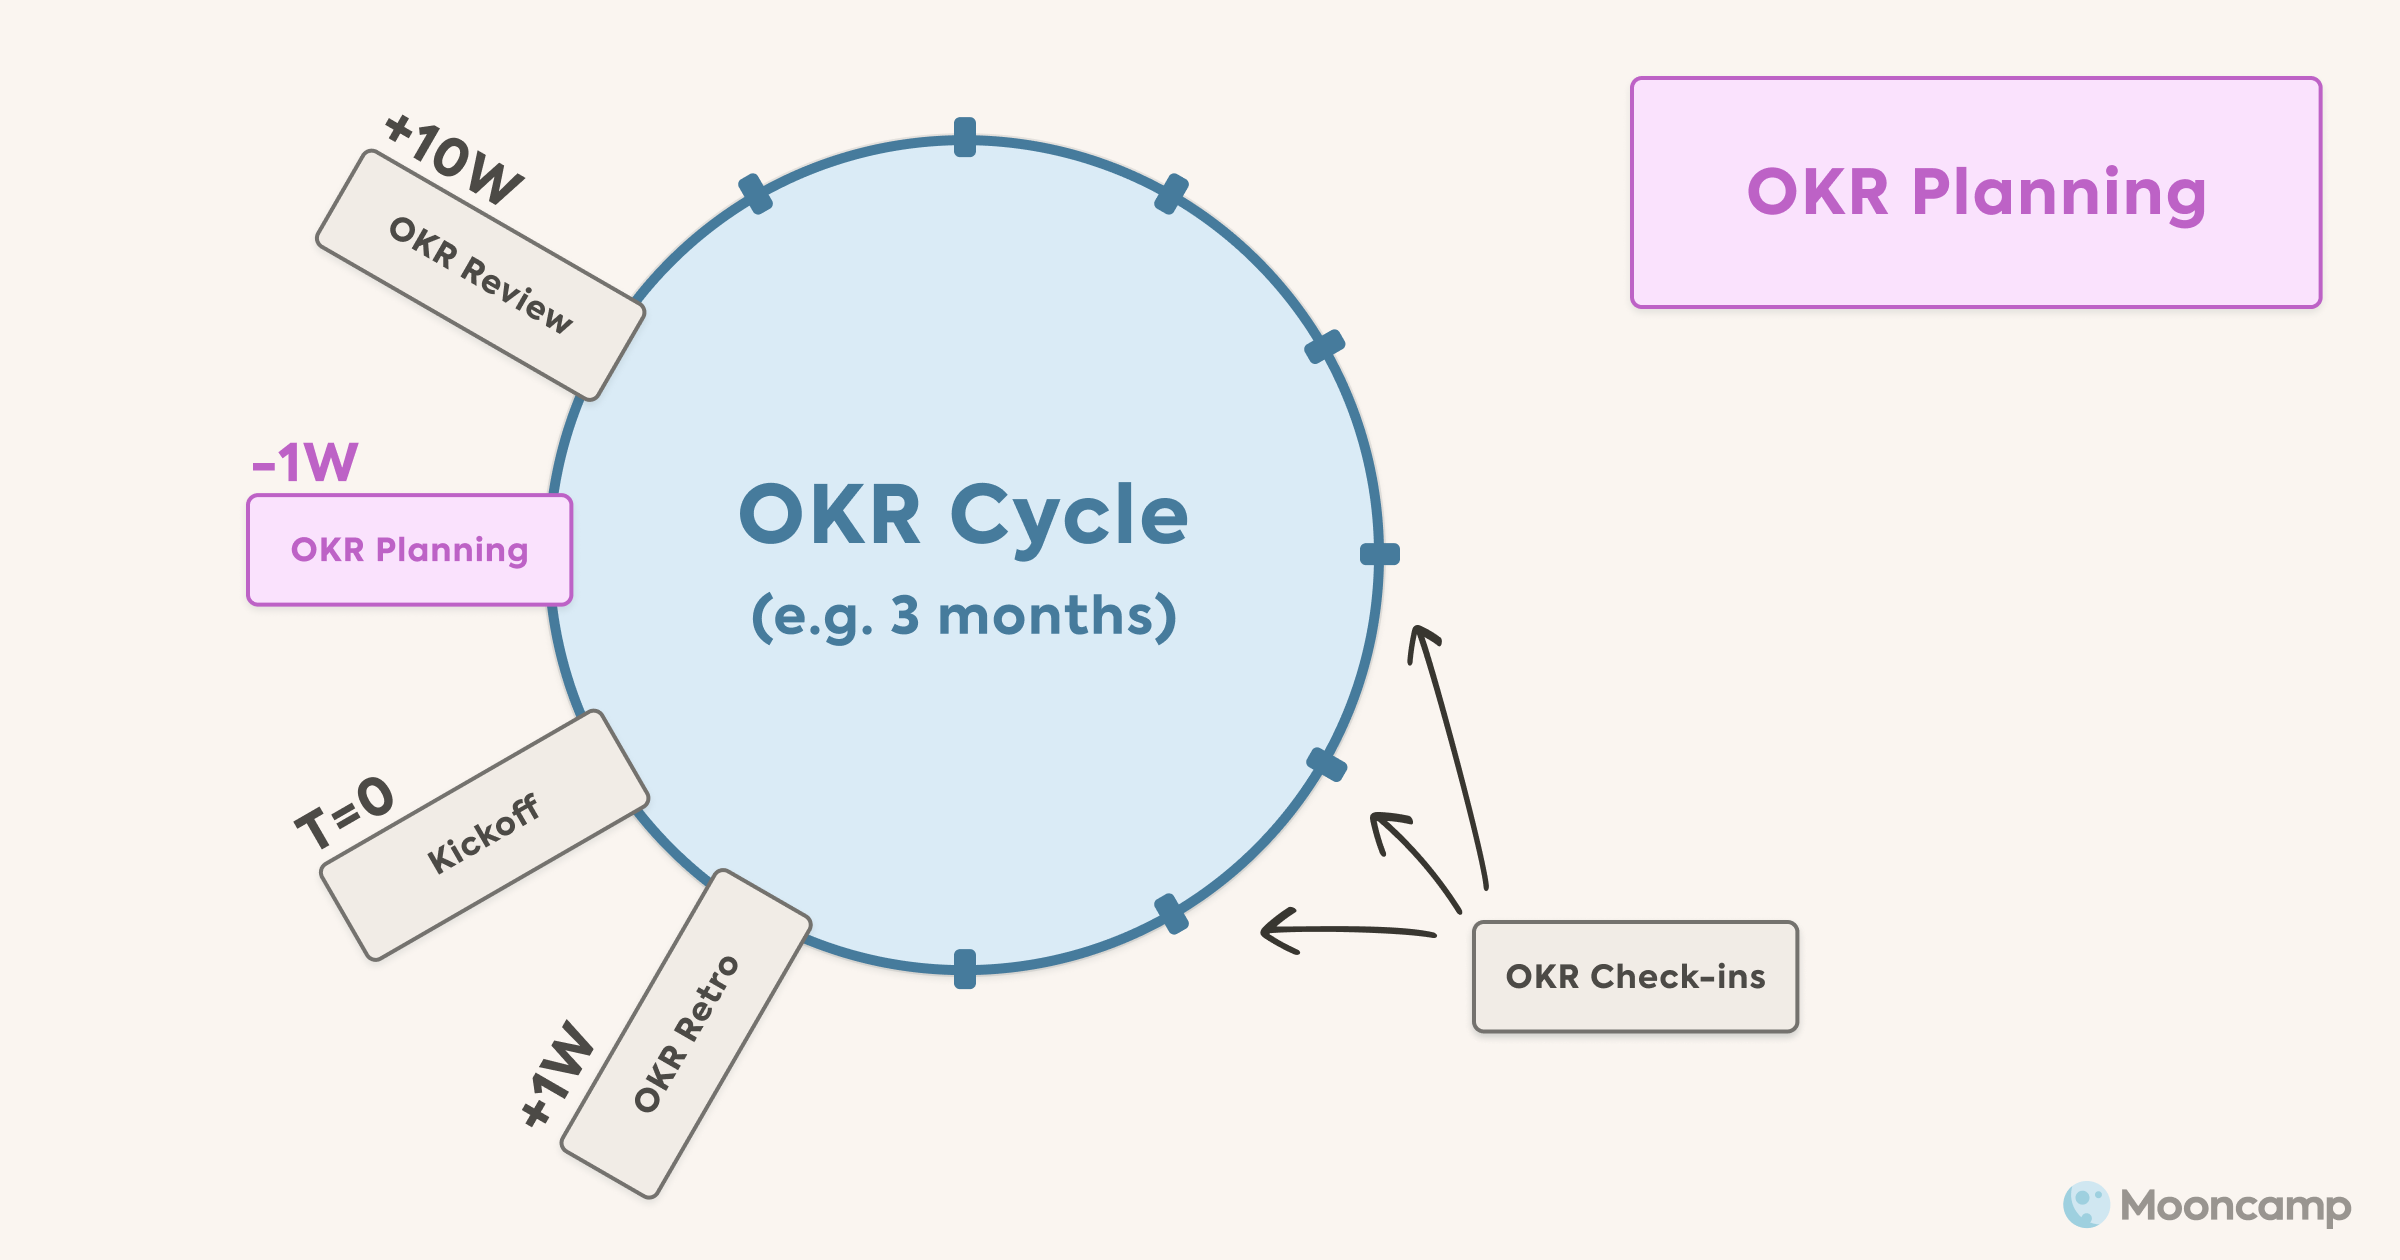 OKR Planning